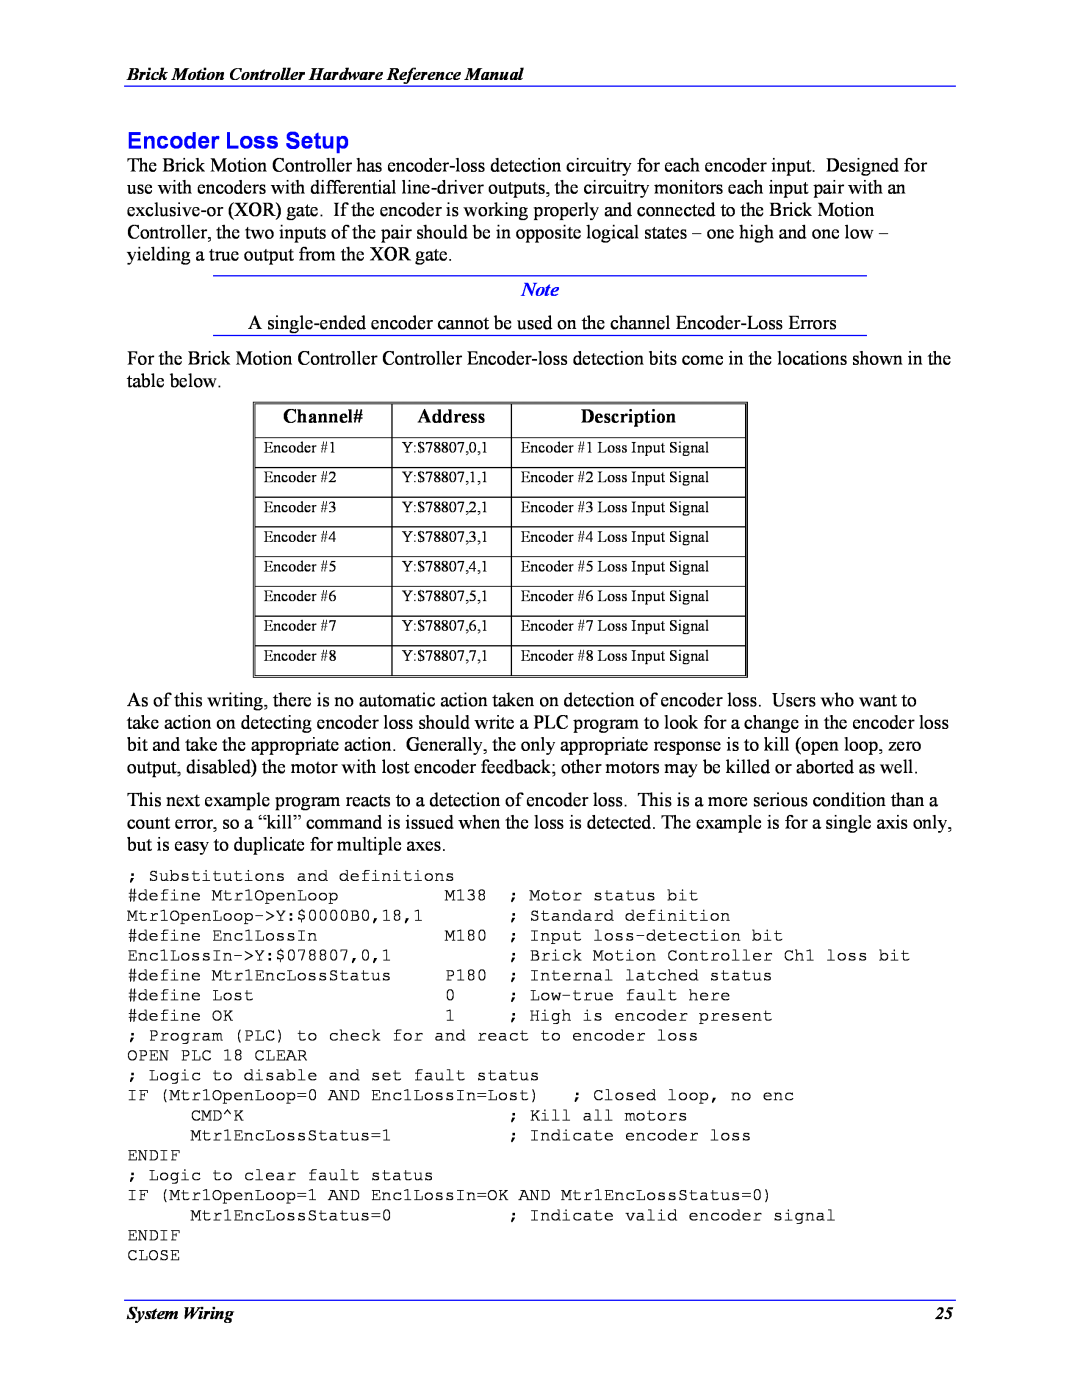 Delta Tau 5xx-603869-xUxx manual Encoder Loss Setup, Channel#, Address, Description 